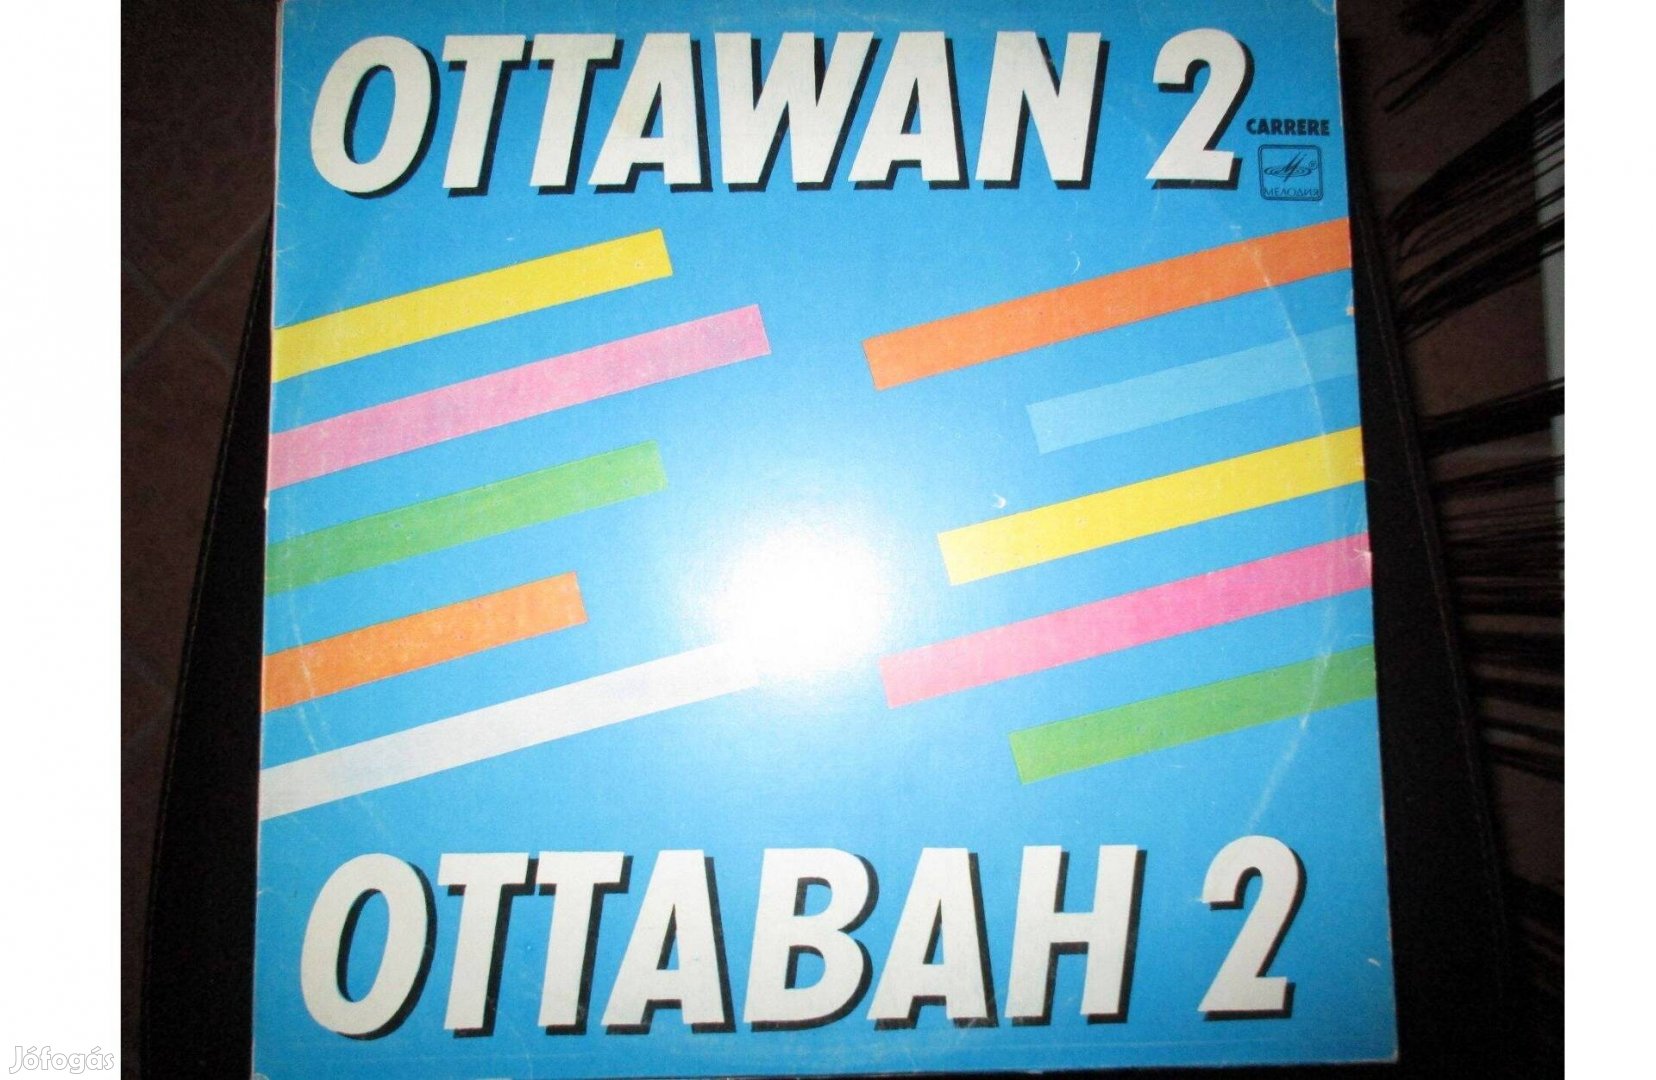 Ottawan bakelit hanglemezek eladók